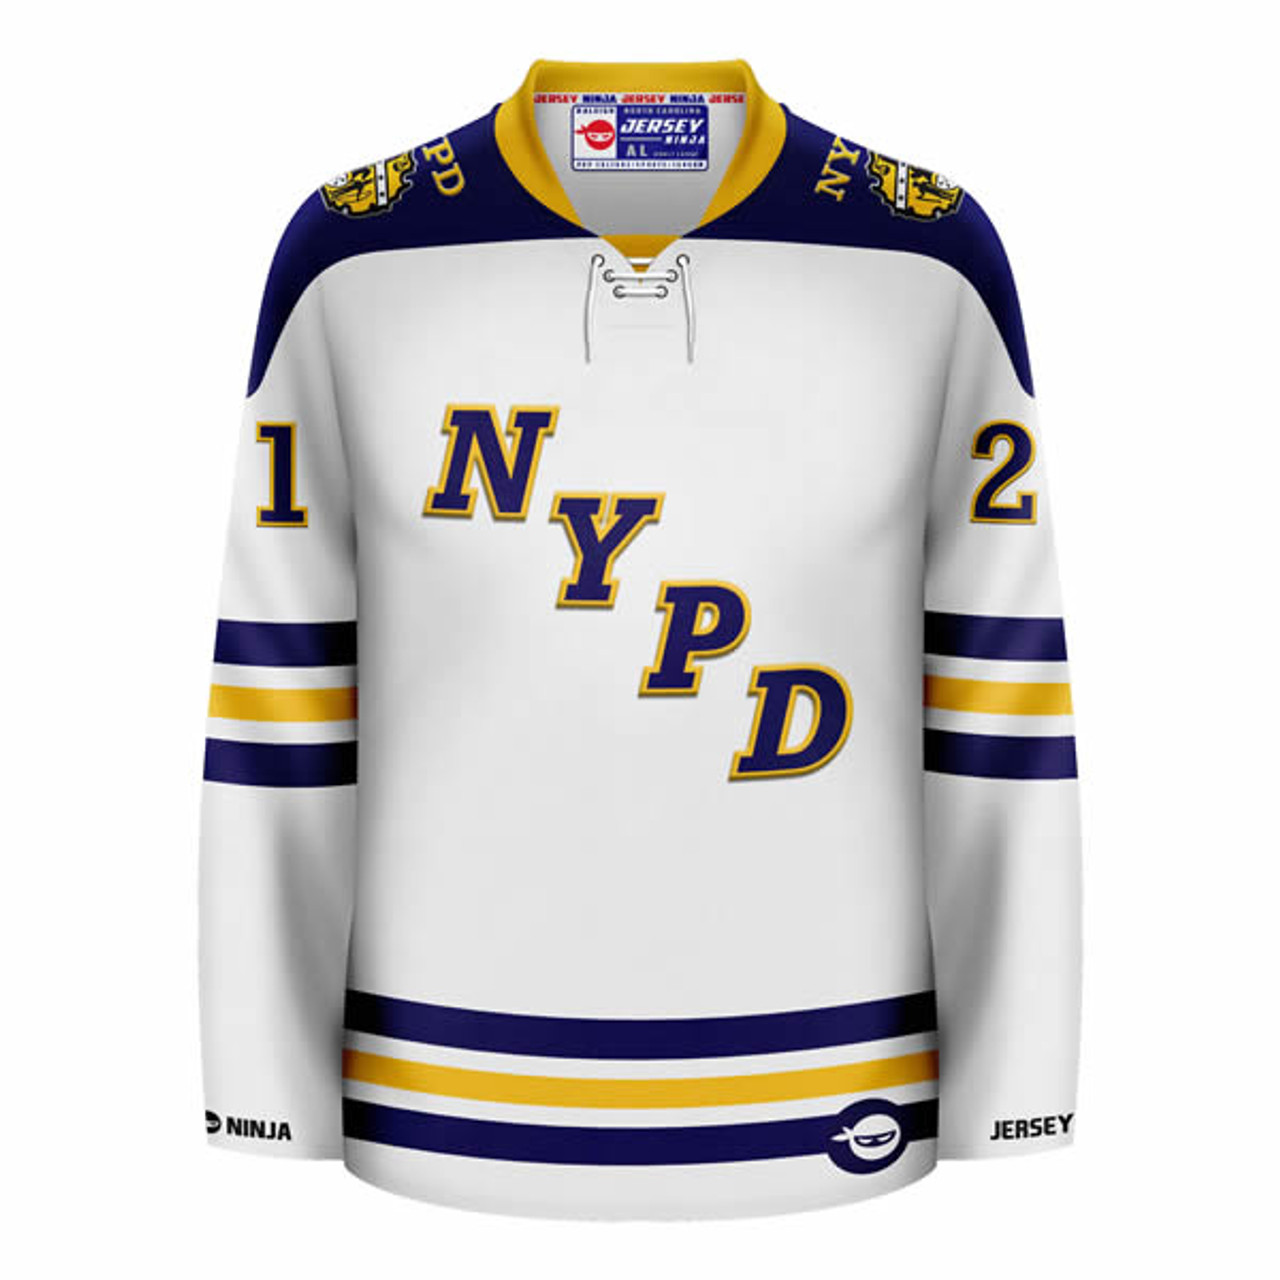 Jersey Ninja - NYPD Shield White Hockey Jersey